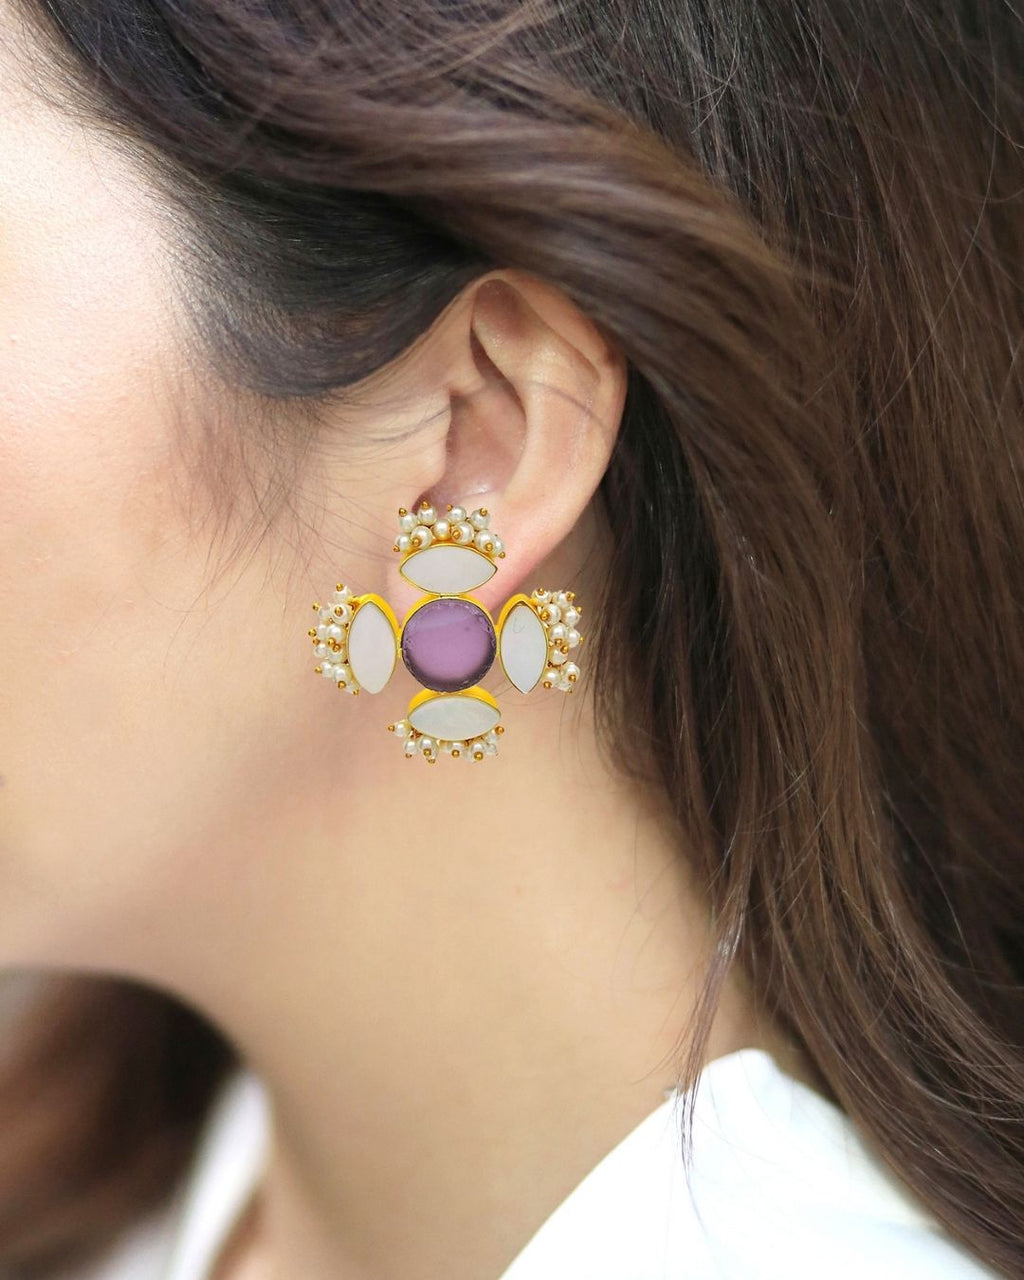 Yvette Earrings in Amethyst - Earrings - Handcrafted Jewellery - Made in India - Dubai Jewellery, Fashion & Lifestyle - Dori